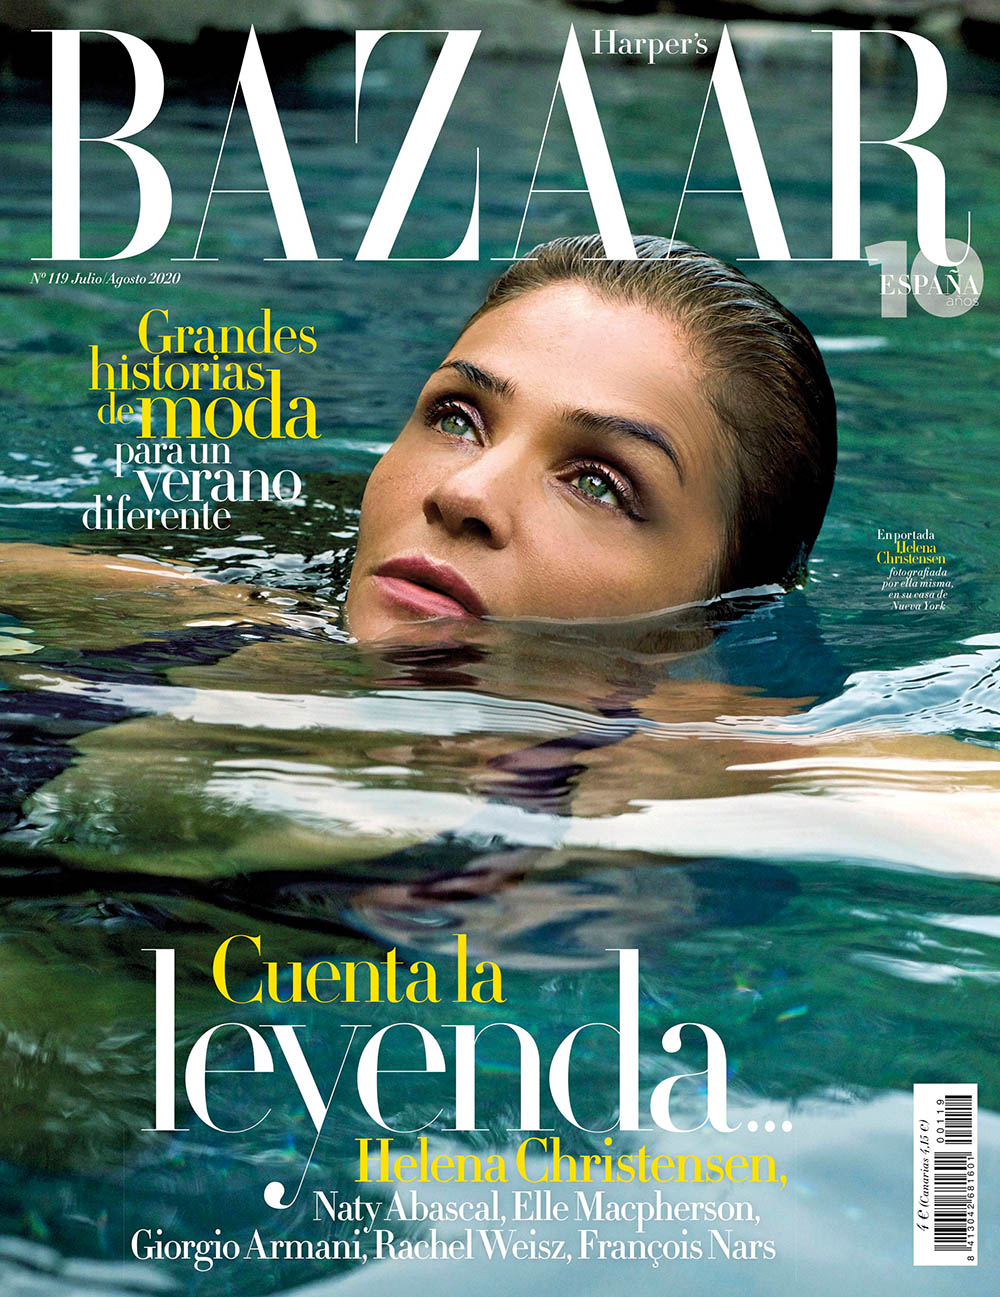 Helena Christensen covers Harper’s Bazaar Spain July August 2020 by Helena Christensen